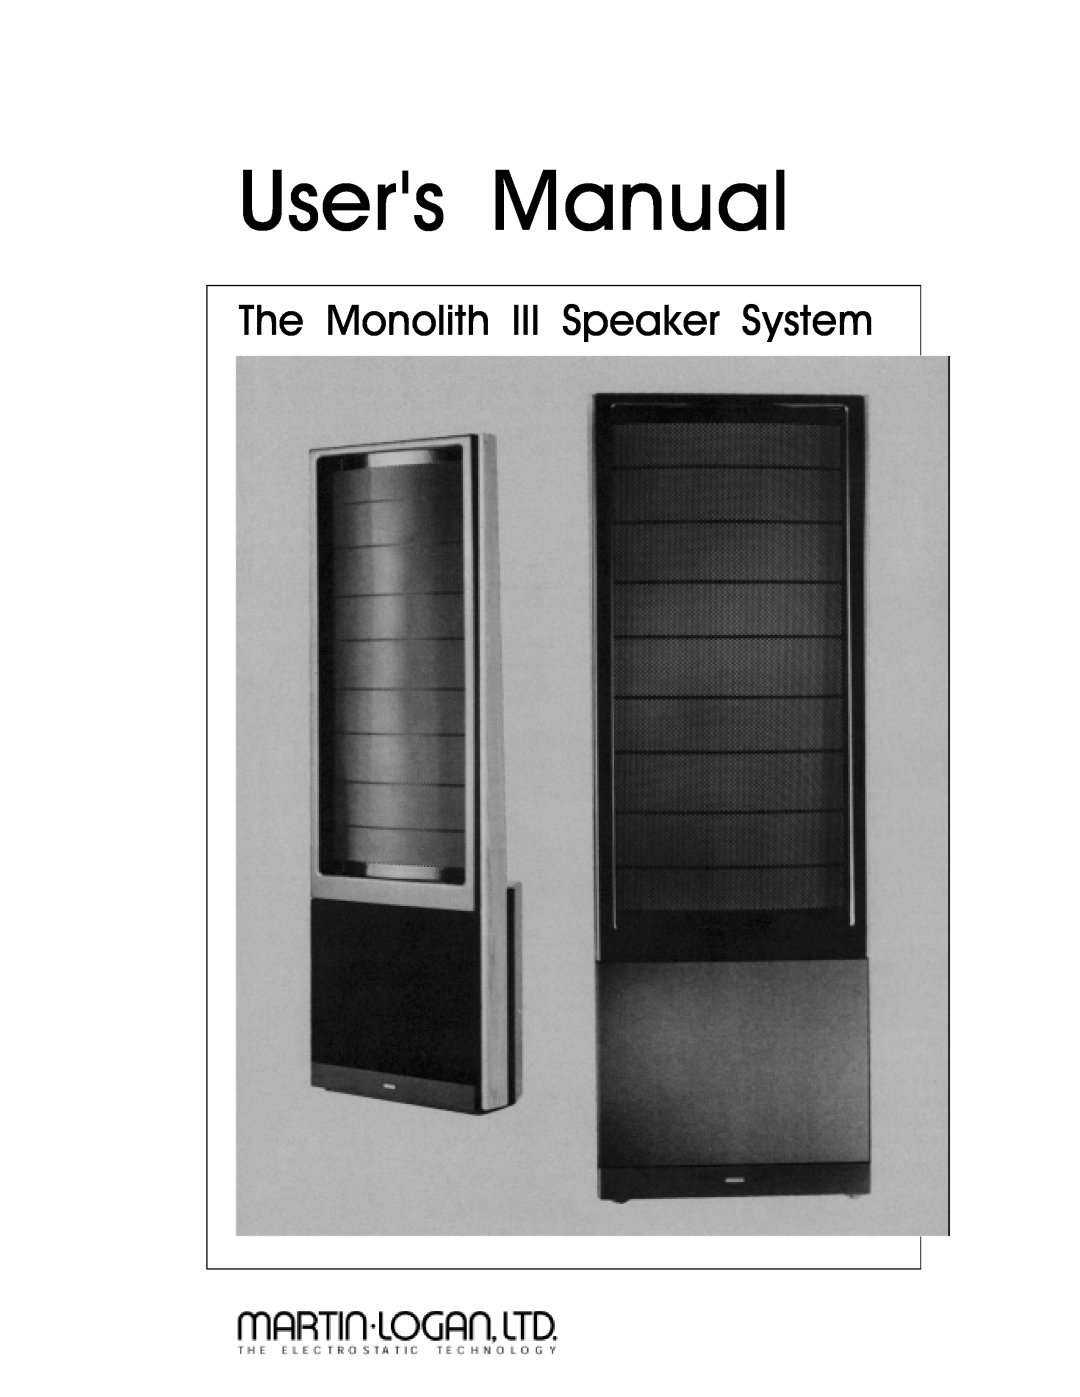 MartinLogan user manual The Monolith III Speaker System 